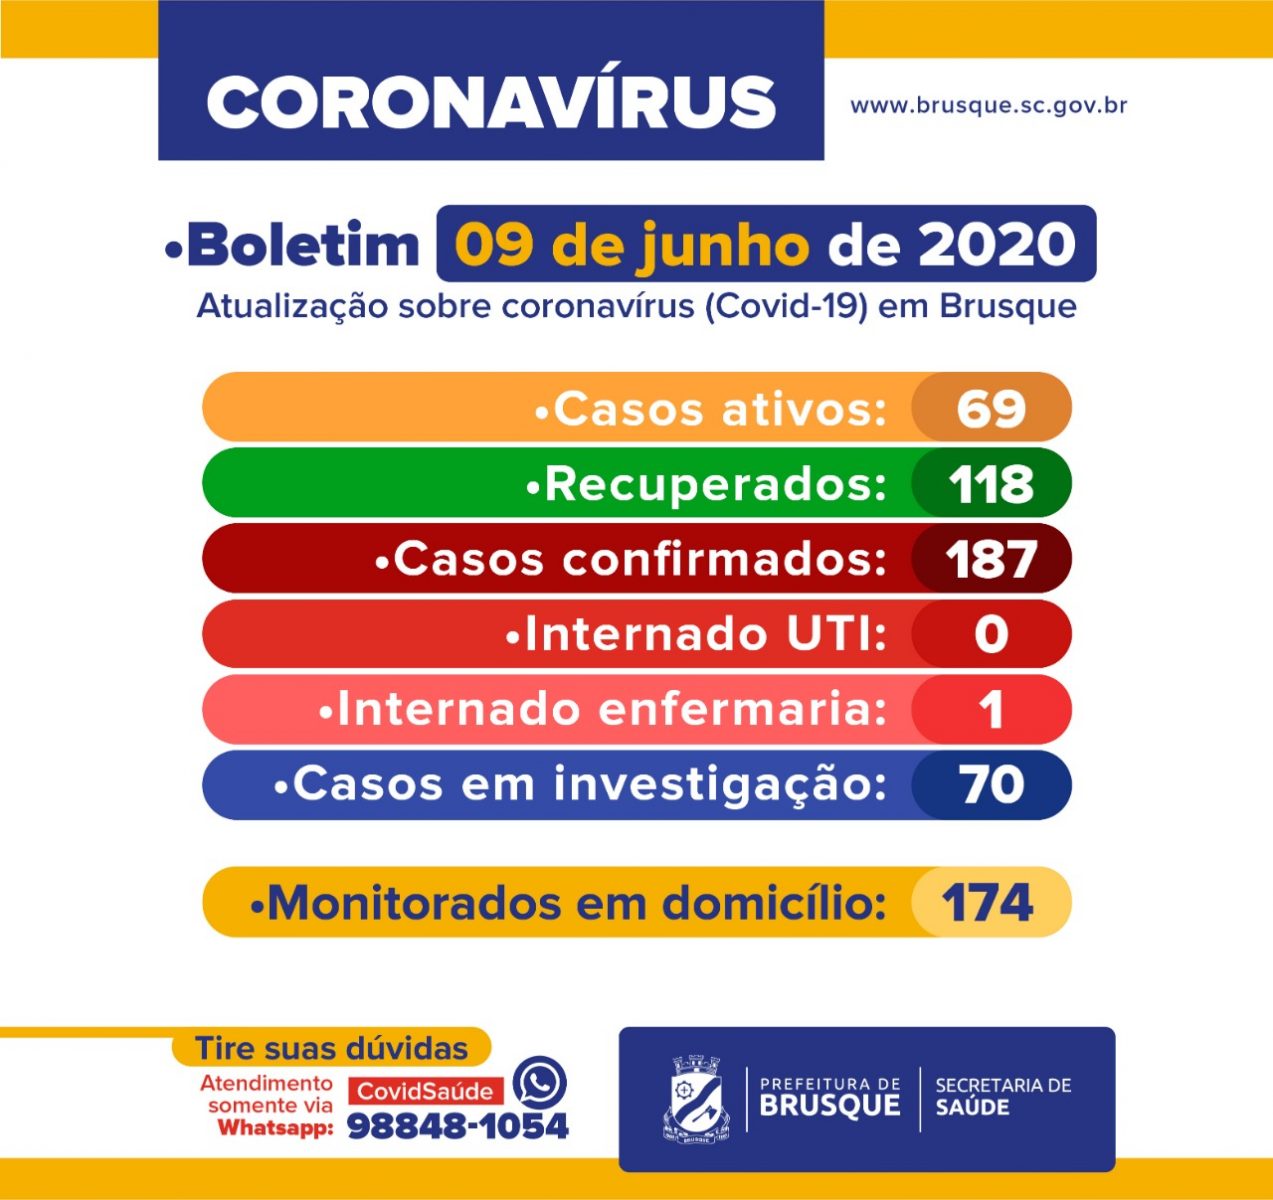 Confira o Boletim Epidemiológico da Prefeitura de Brusque desta terça-feira (09)